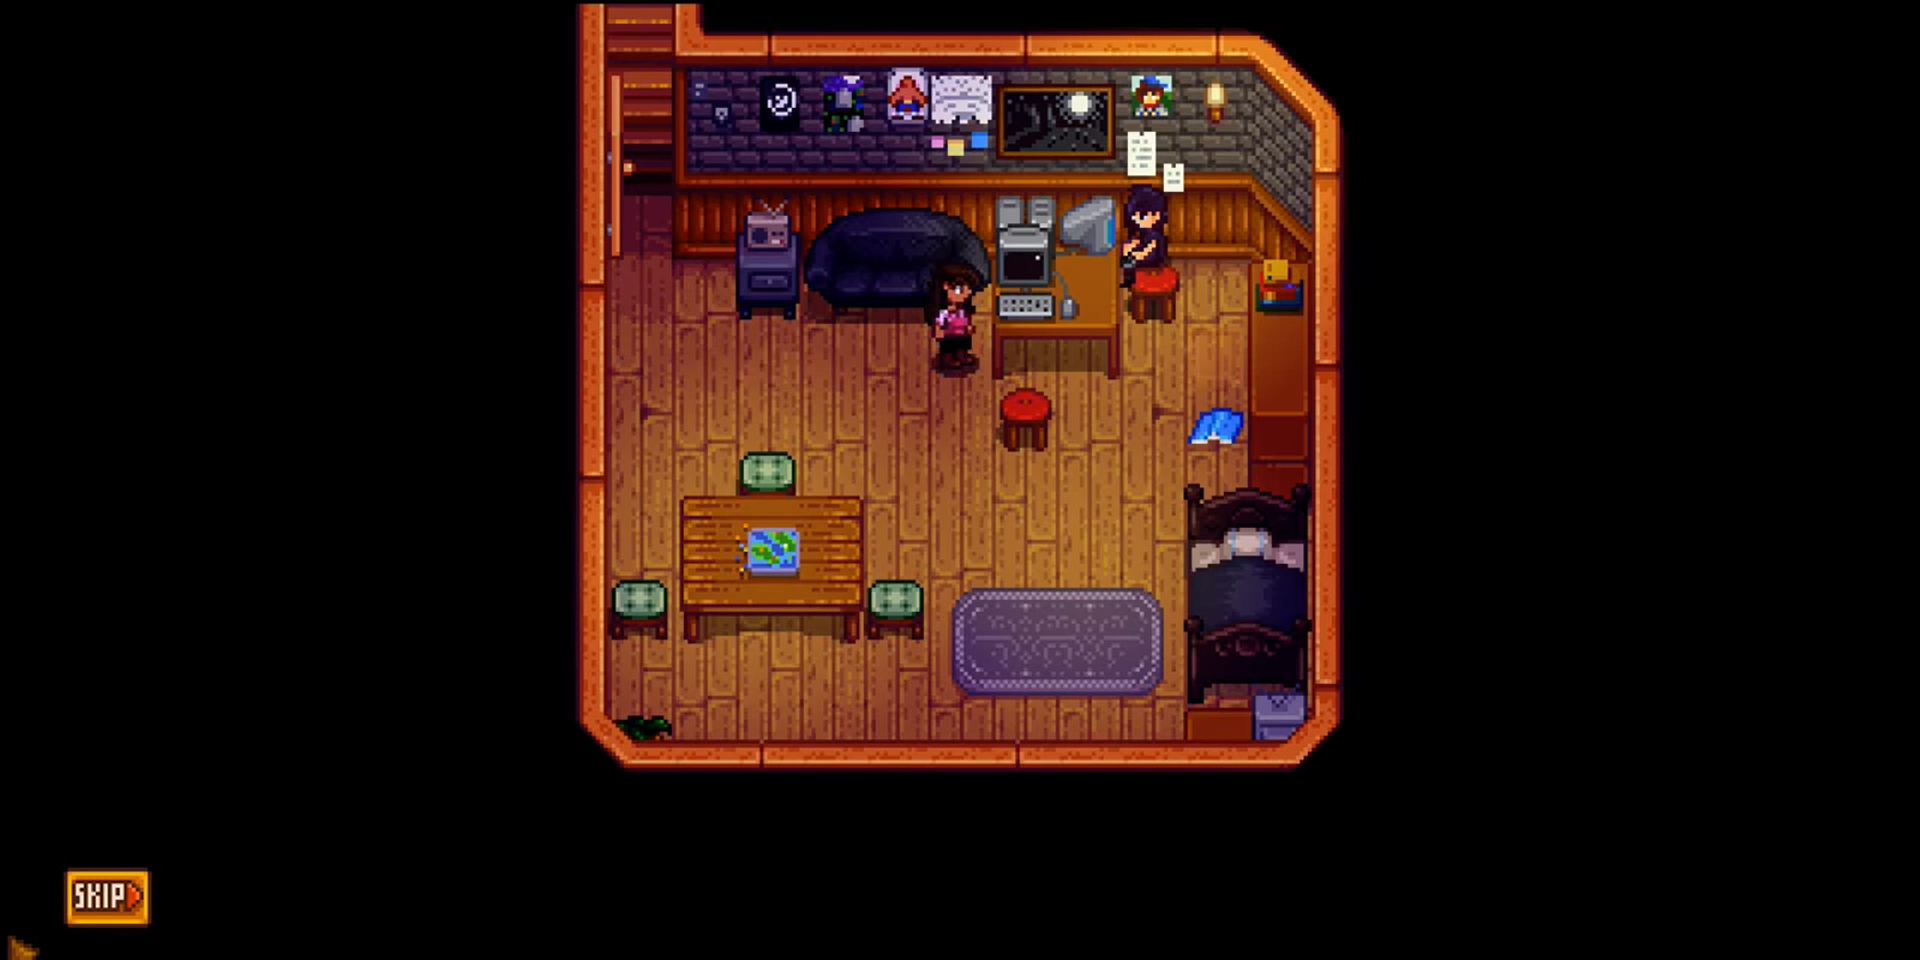 A player visits Sebastian in his basement bedroom